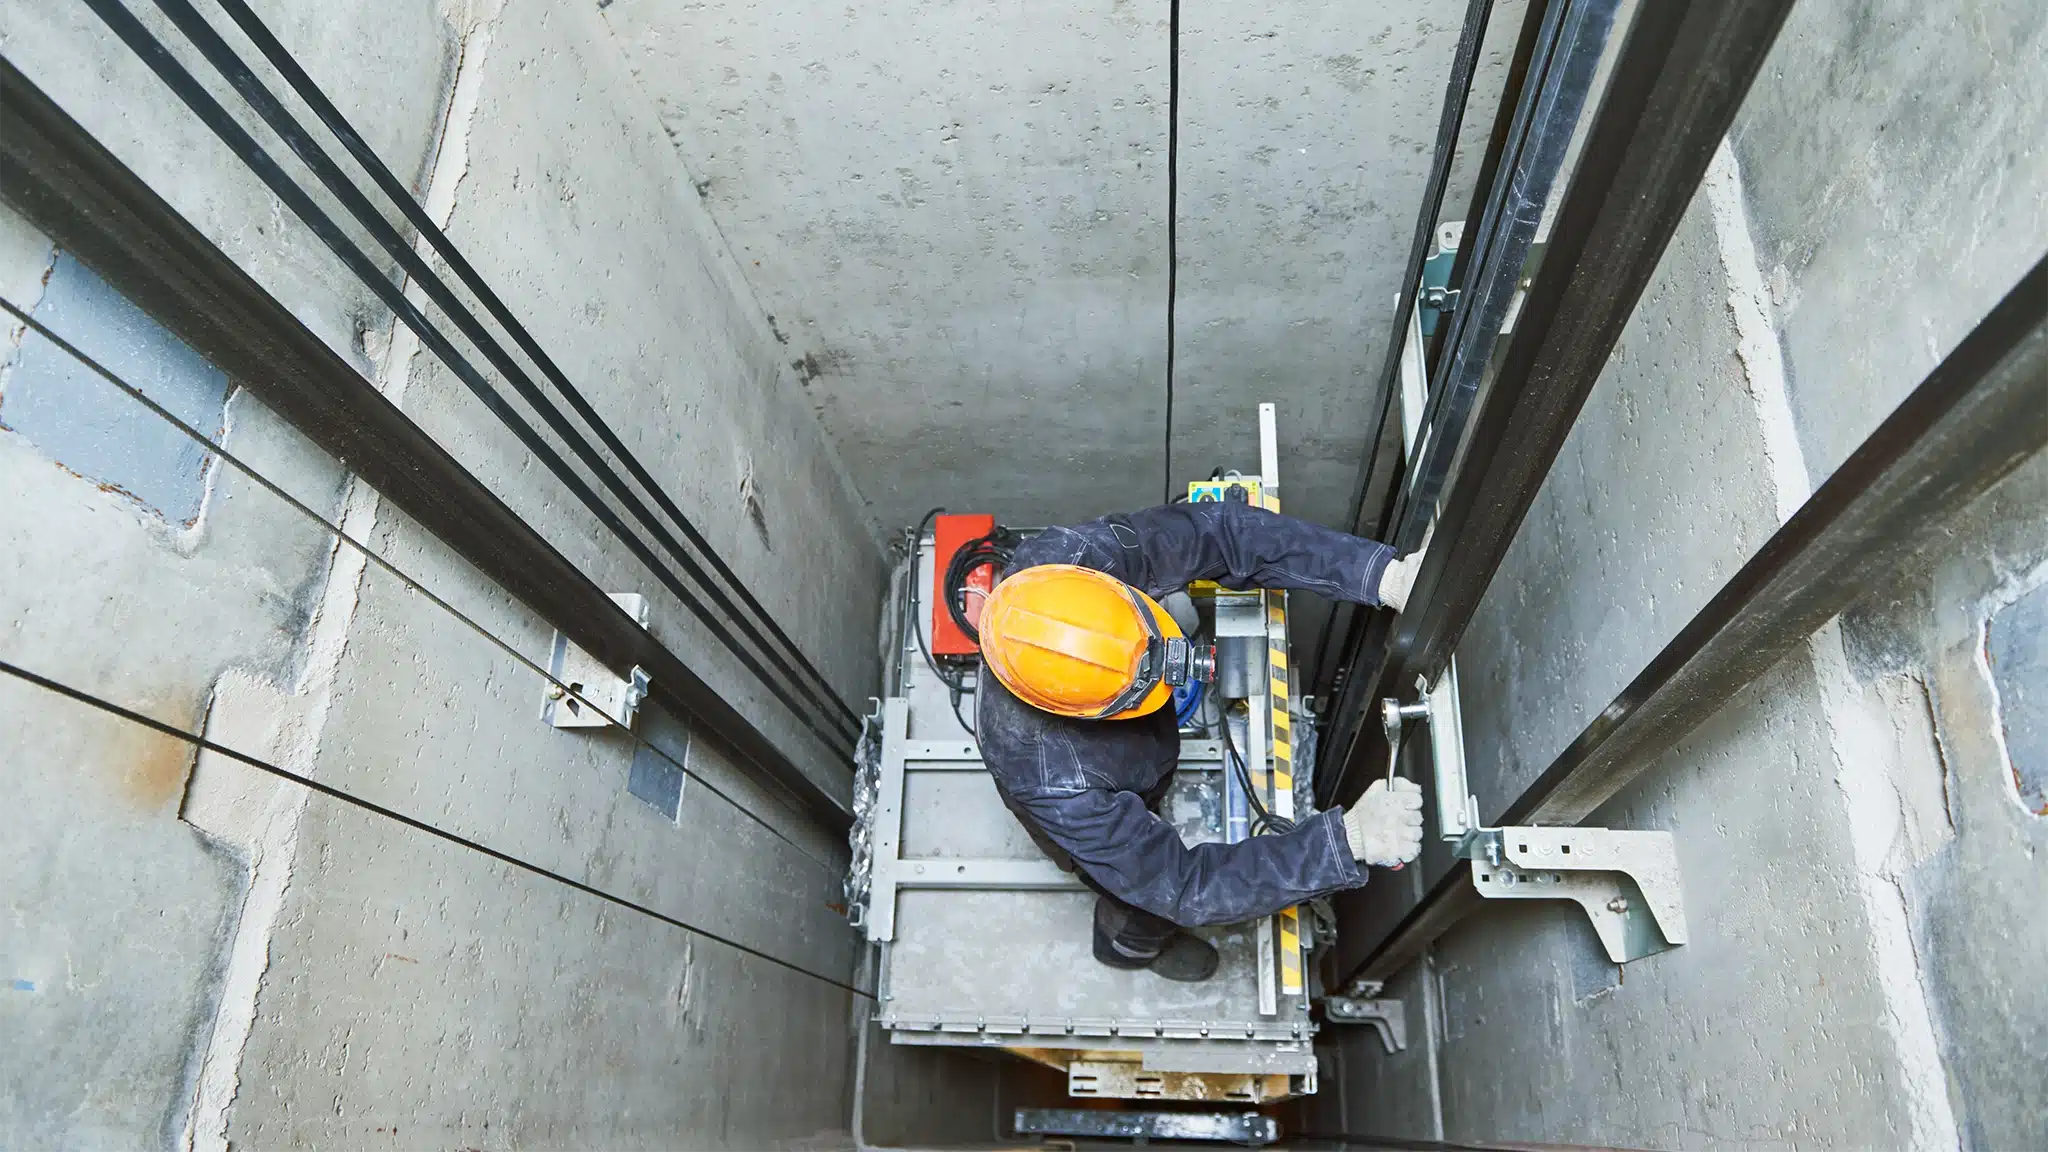 Island Elevator Repair - Lift Machinist Repairing Elevator in Lift Shaft